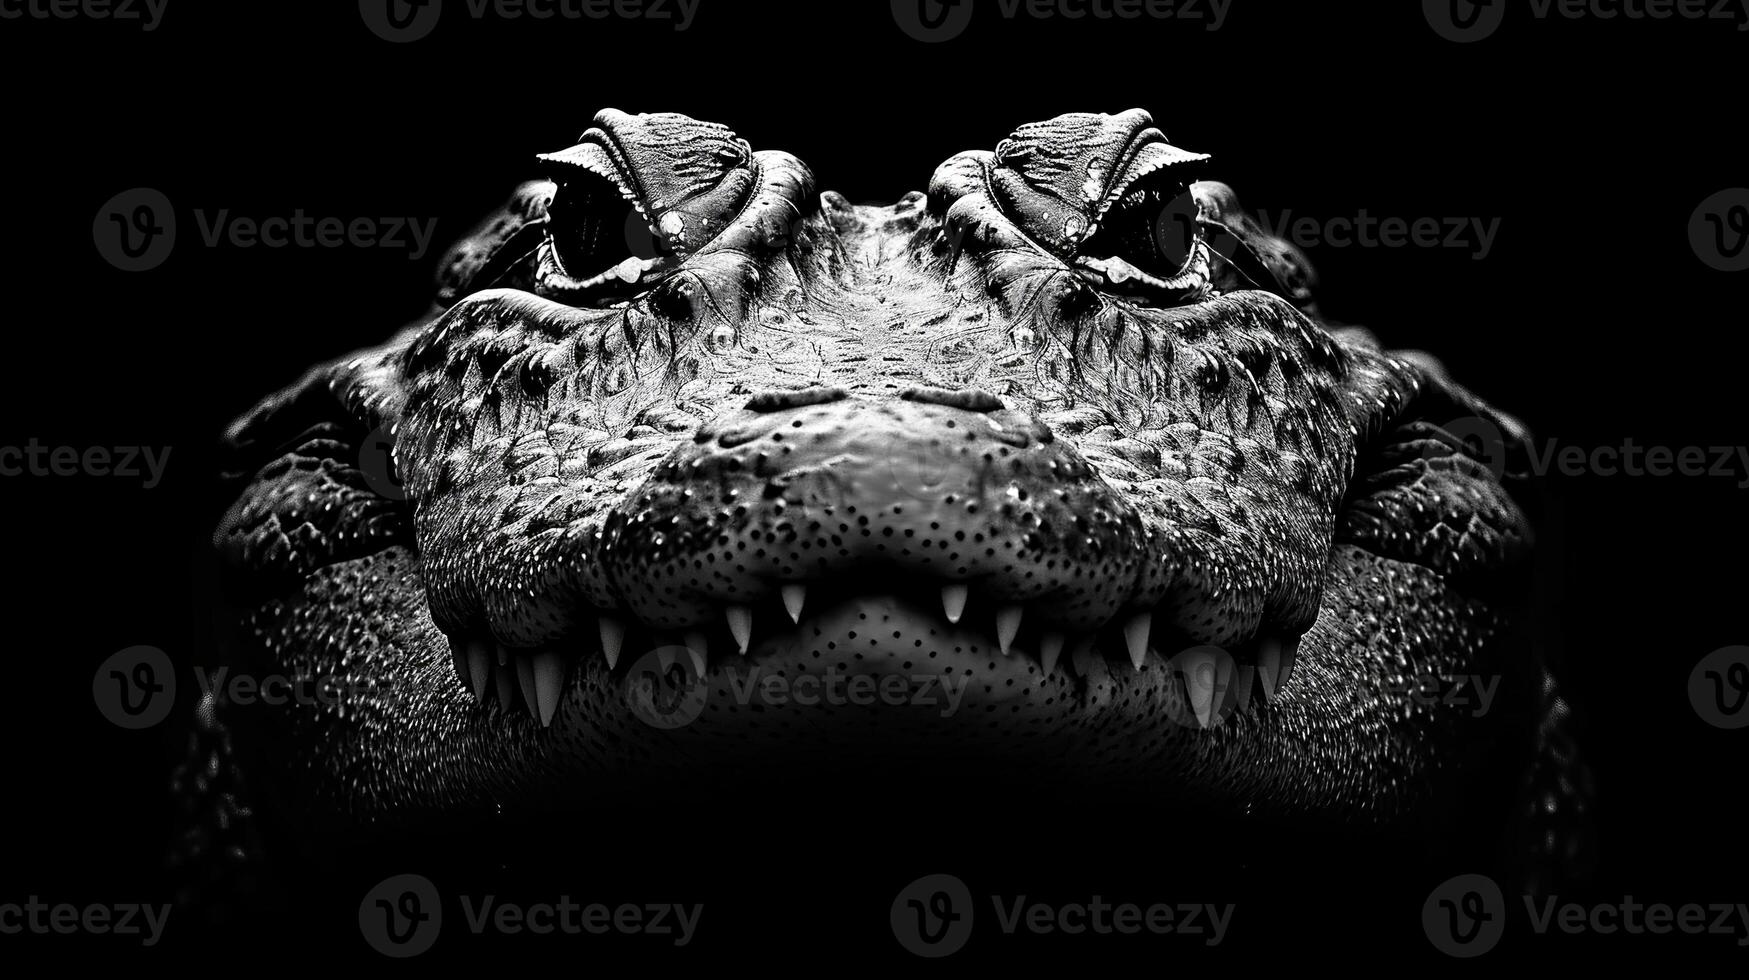 AI generated Minimalist mad alligator against black background, close up alligator face showcasing its sharp teeth and textured skin photo